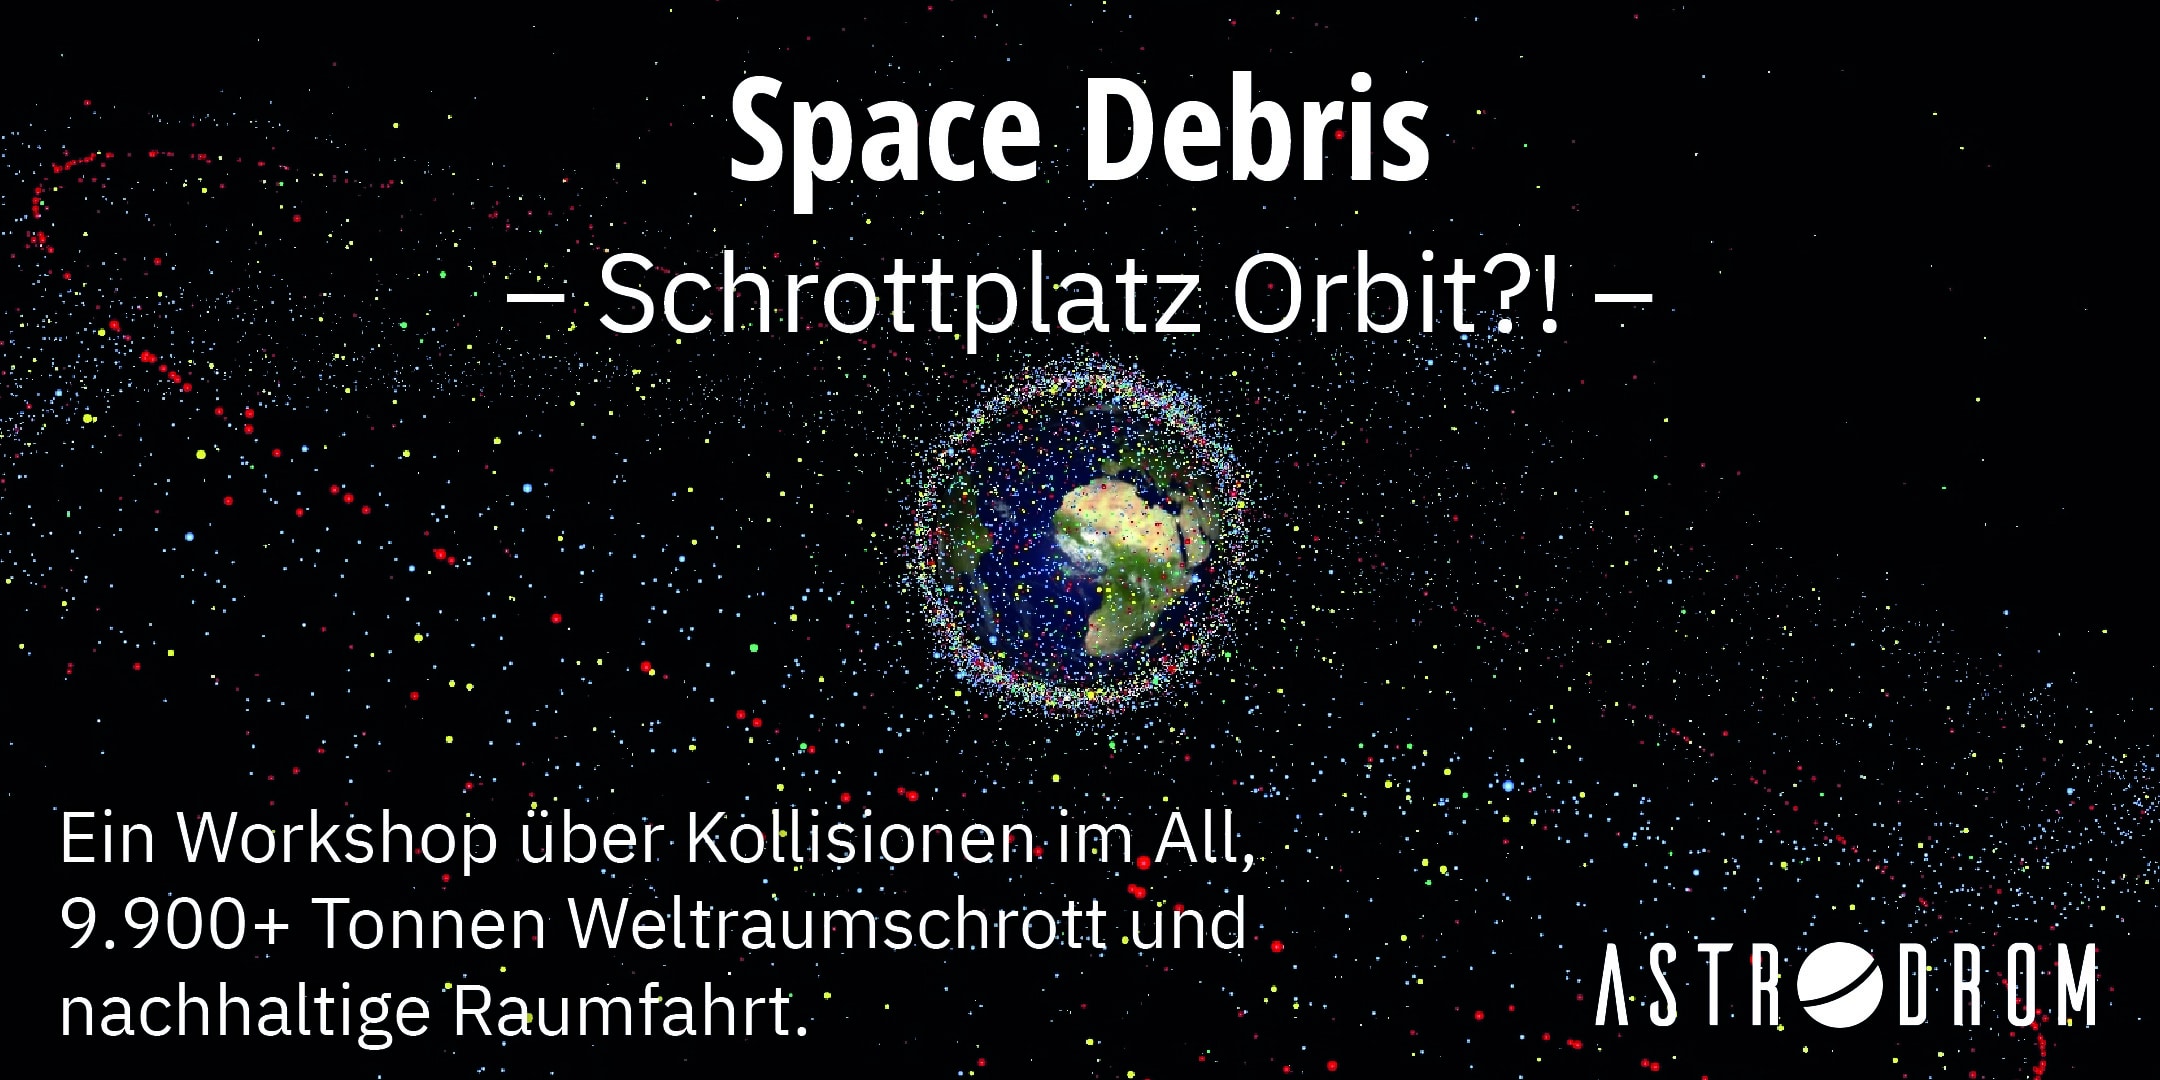 Cover Astrodrom Workshop "Space Debris" at the IdeenExpo 2022